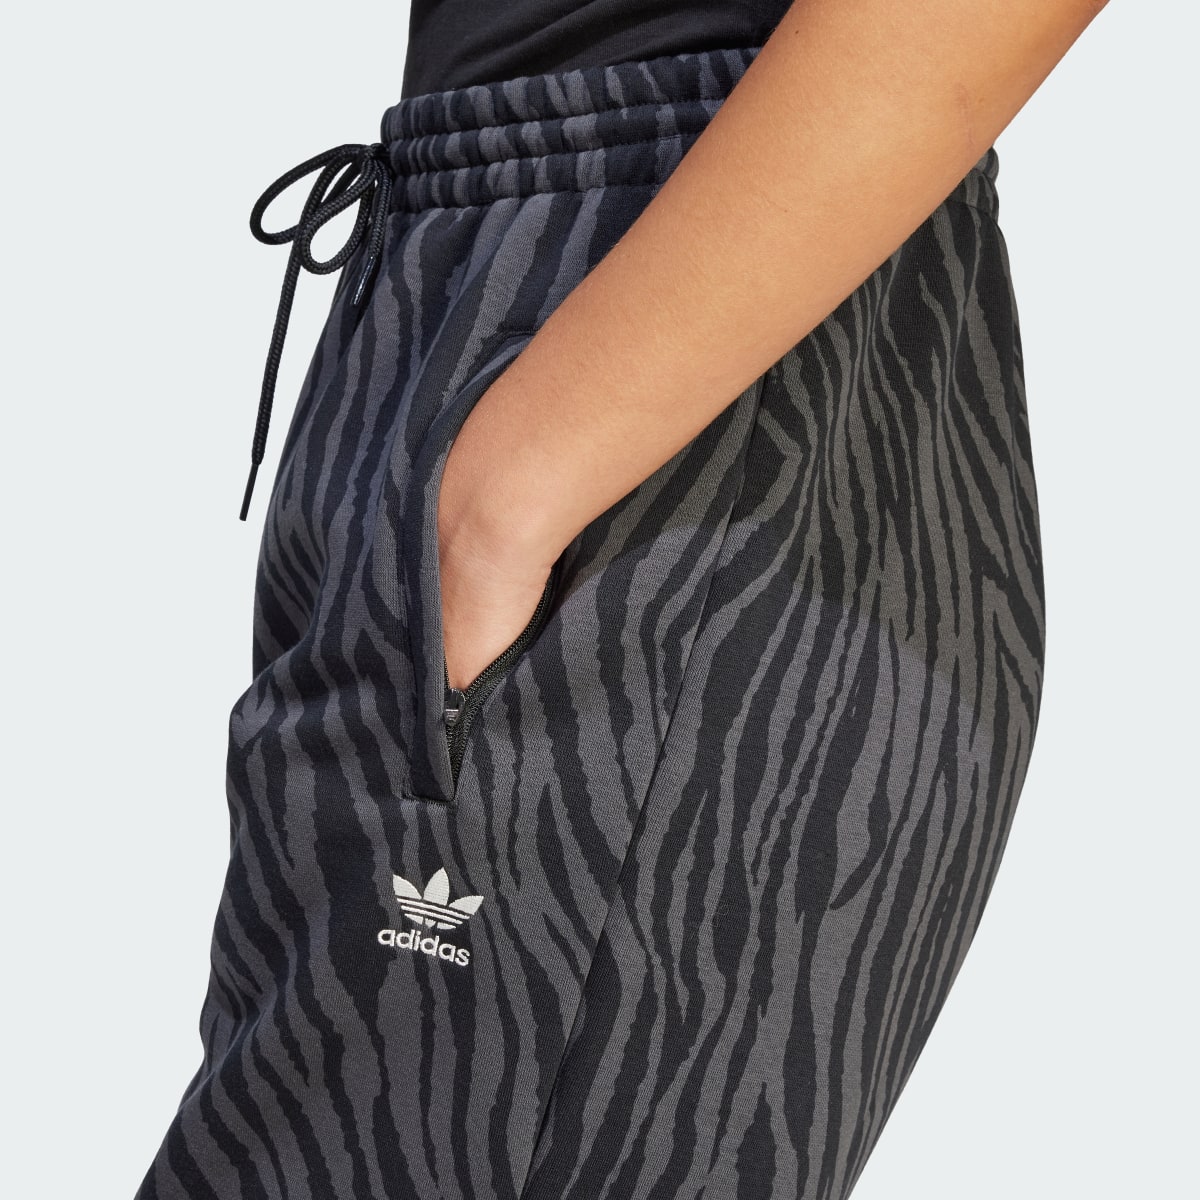 Adidas Allover Zebra Animal Print Essentials Joggers. 5